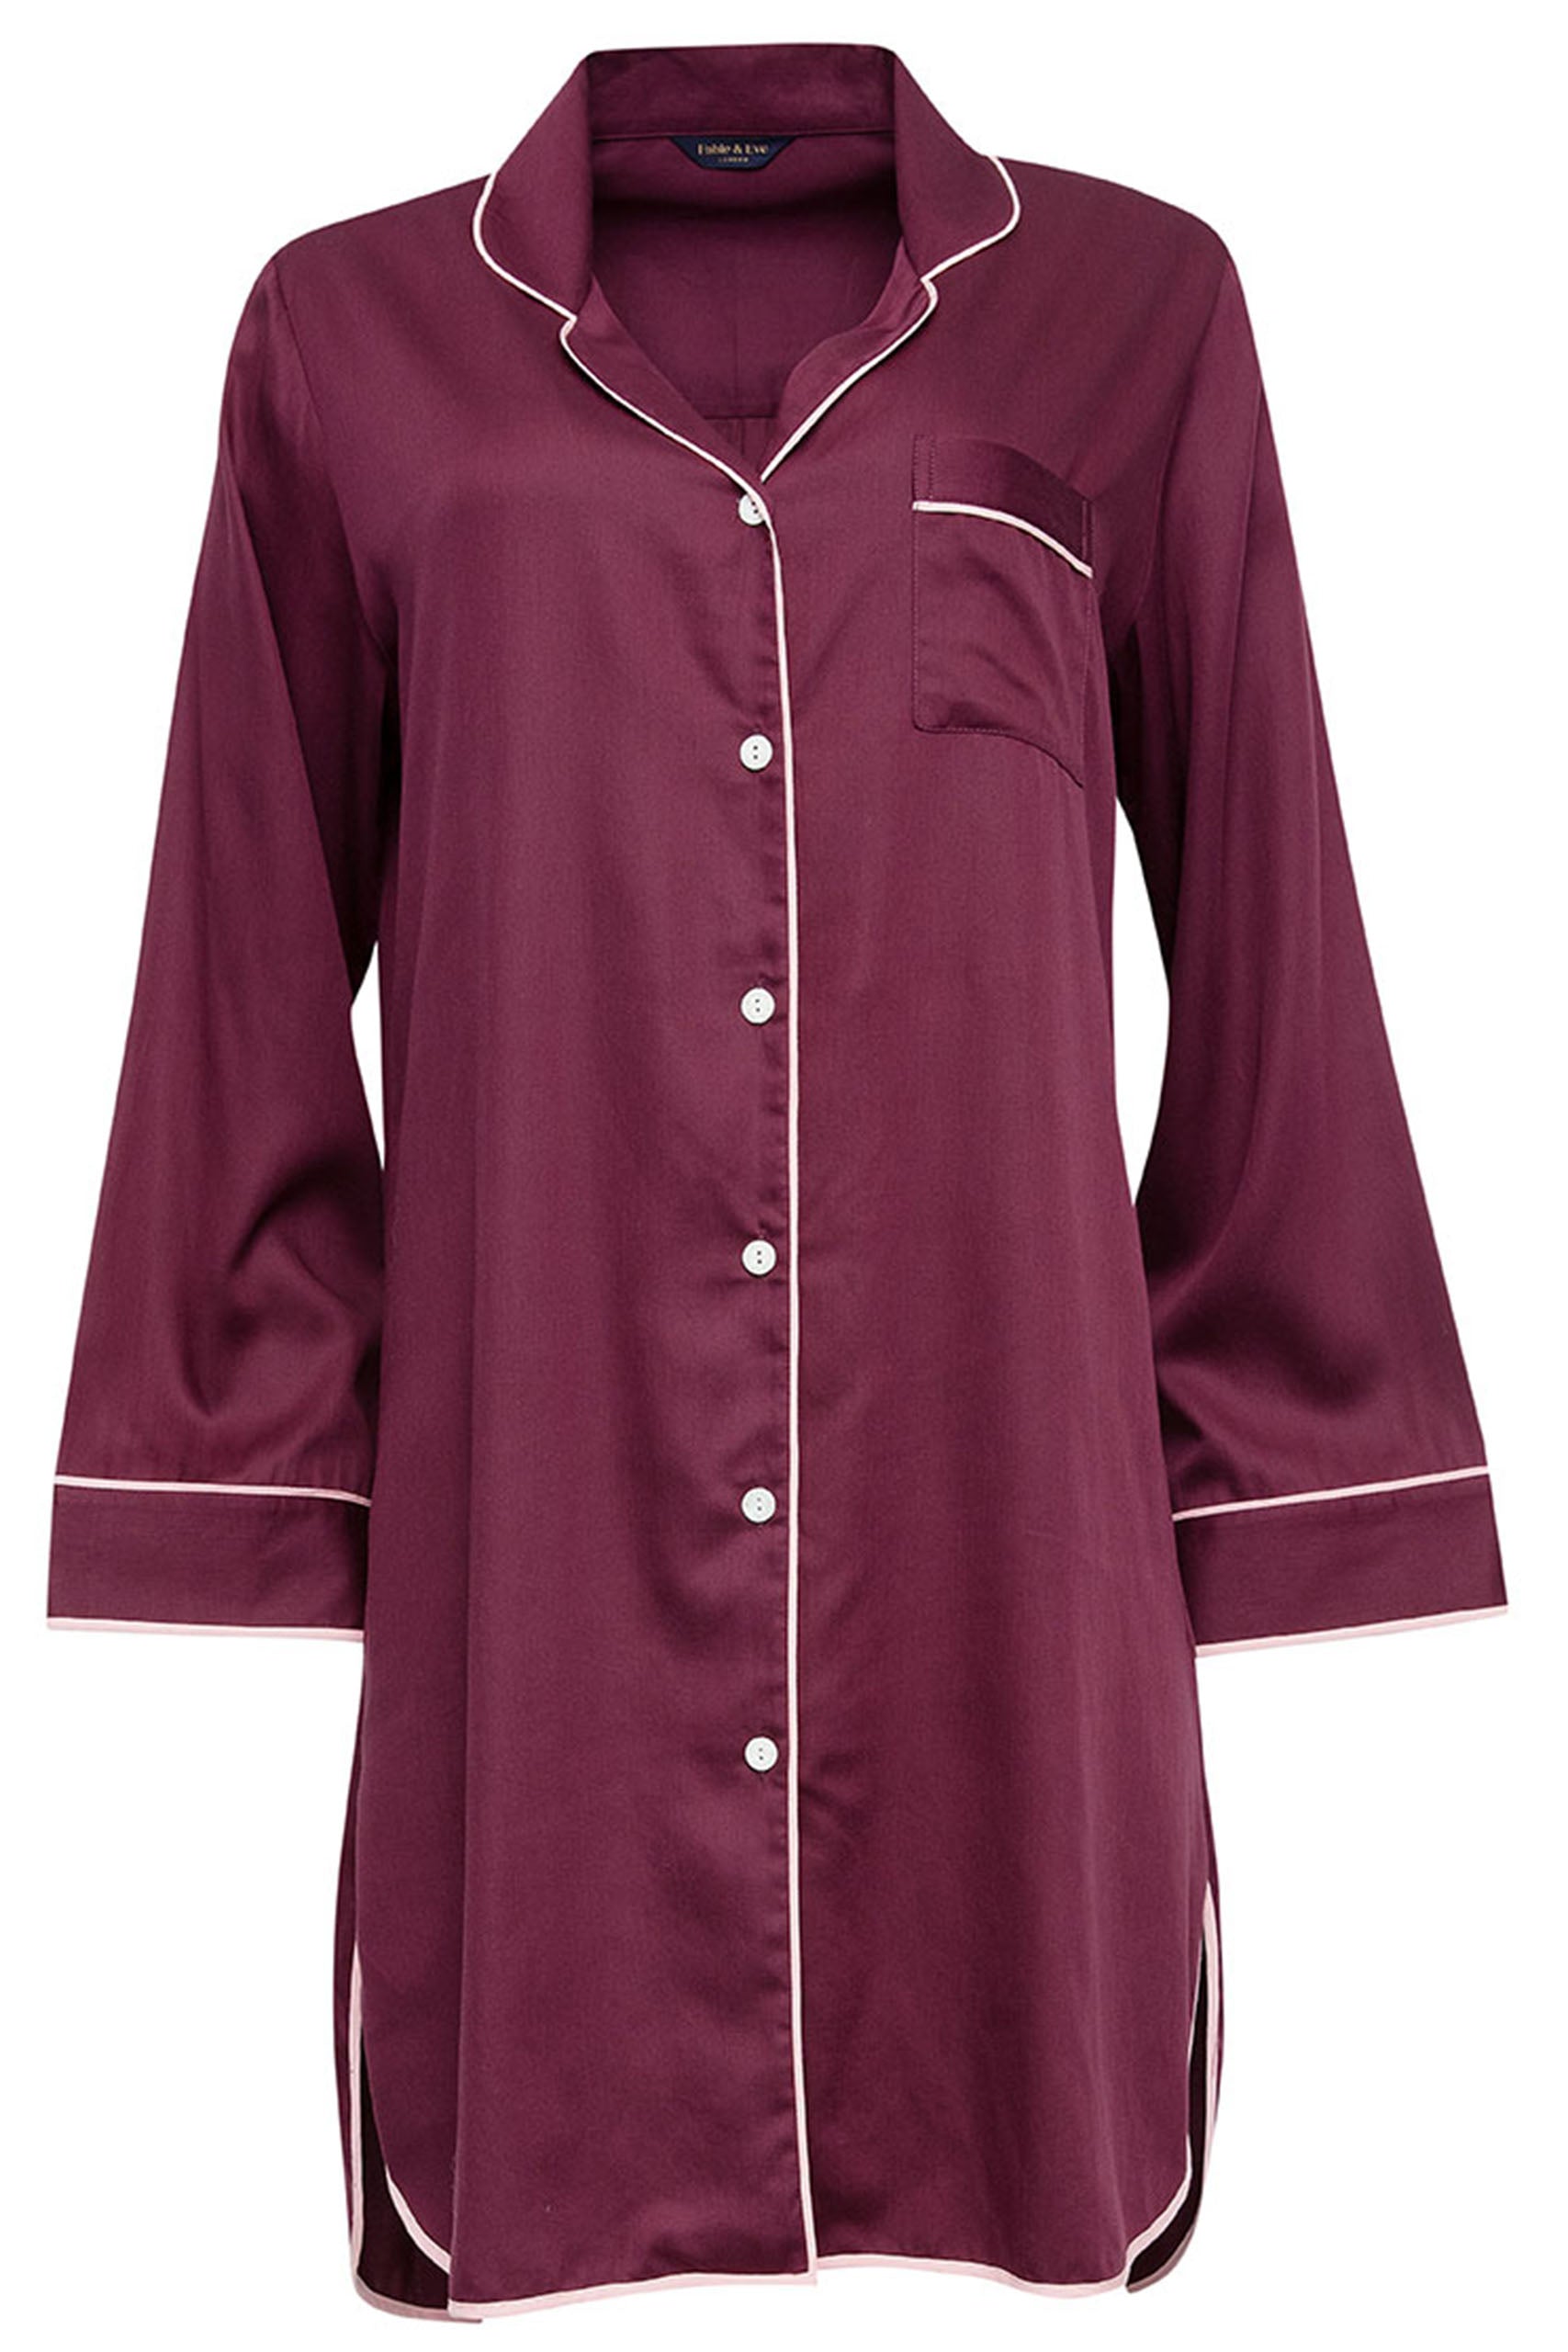 burgundy nightshirt